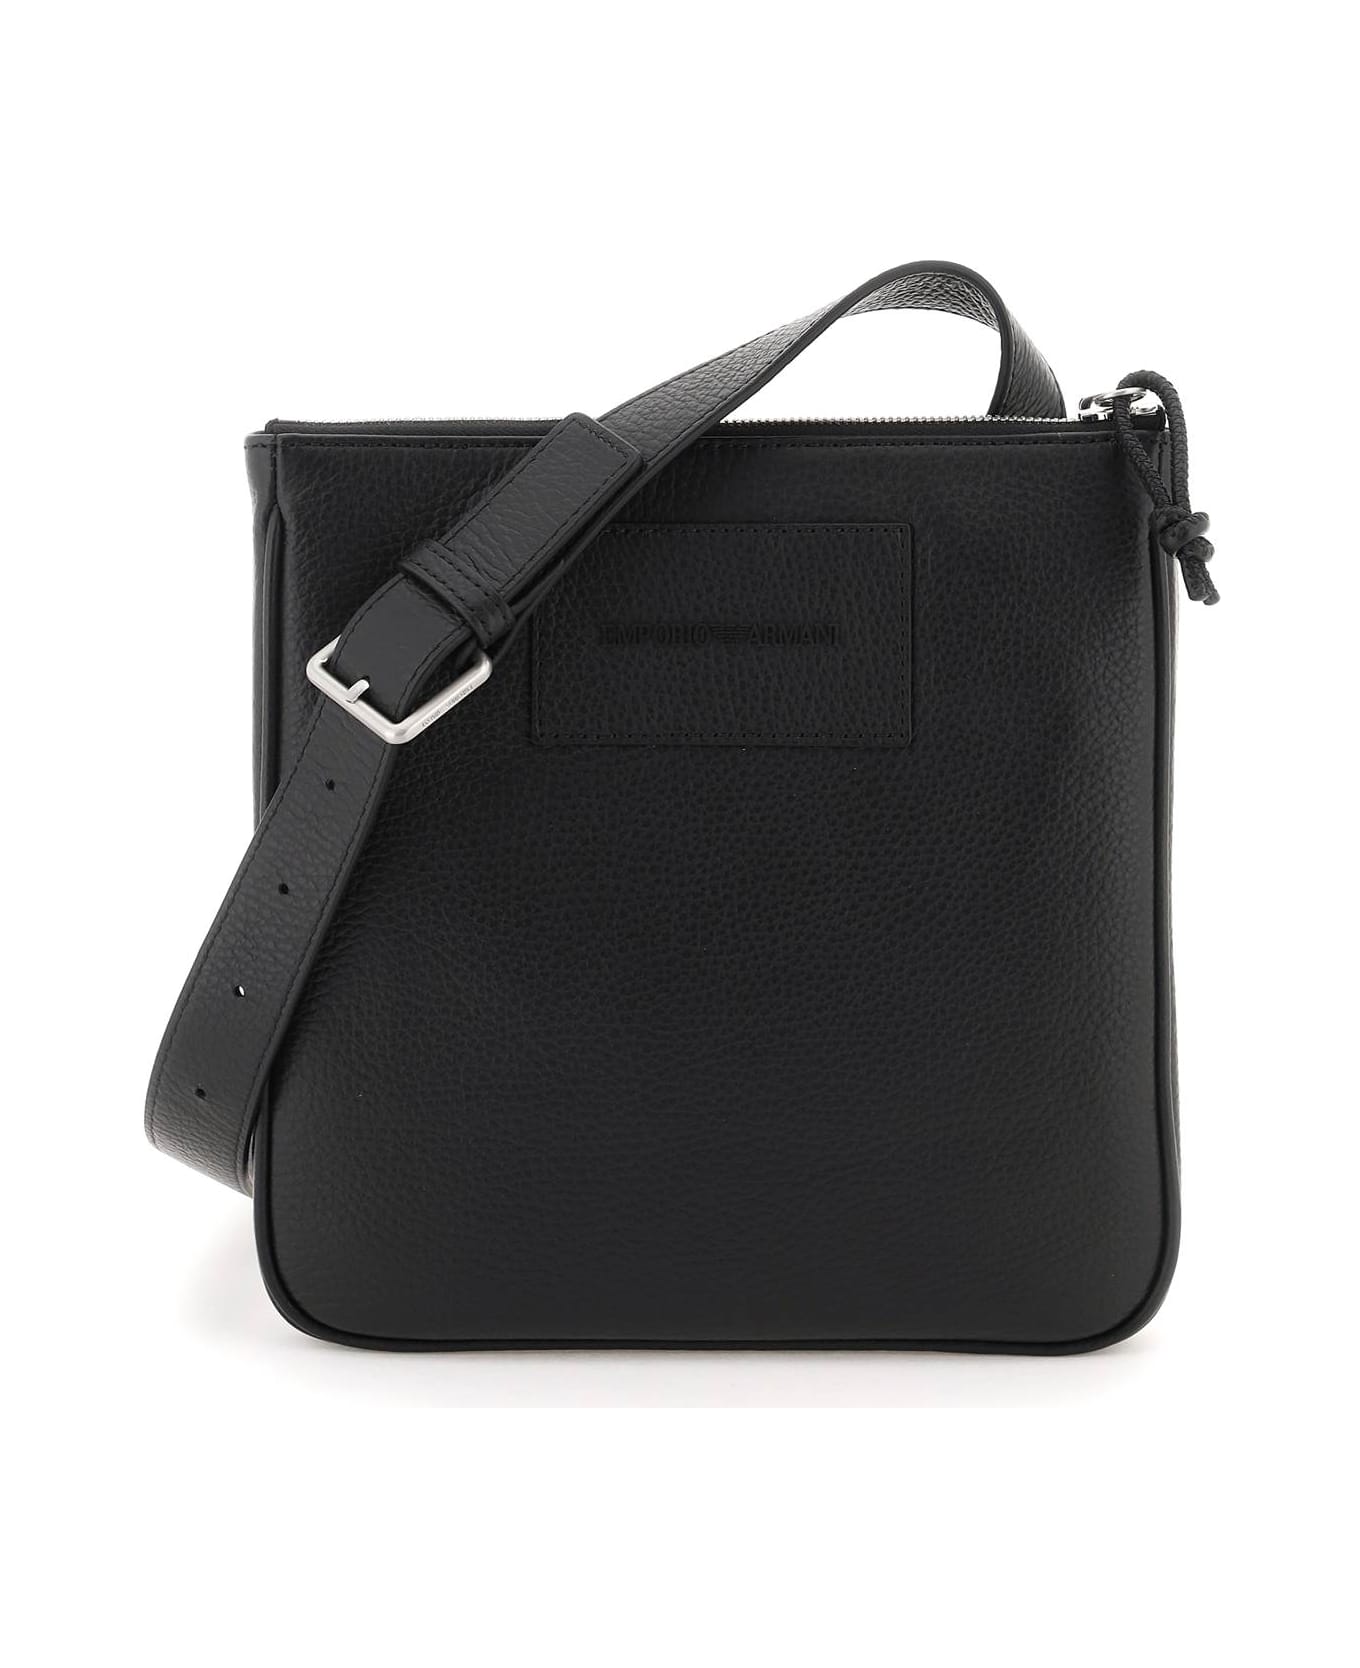 Emporio Armani Leather Crossbody Bag - Nero